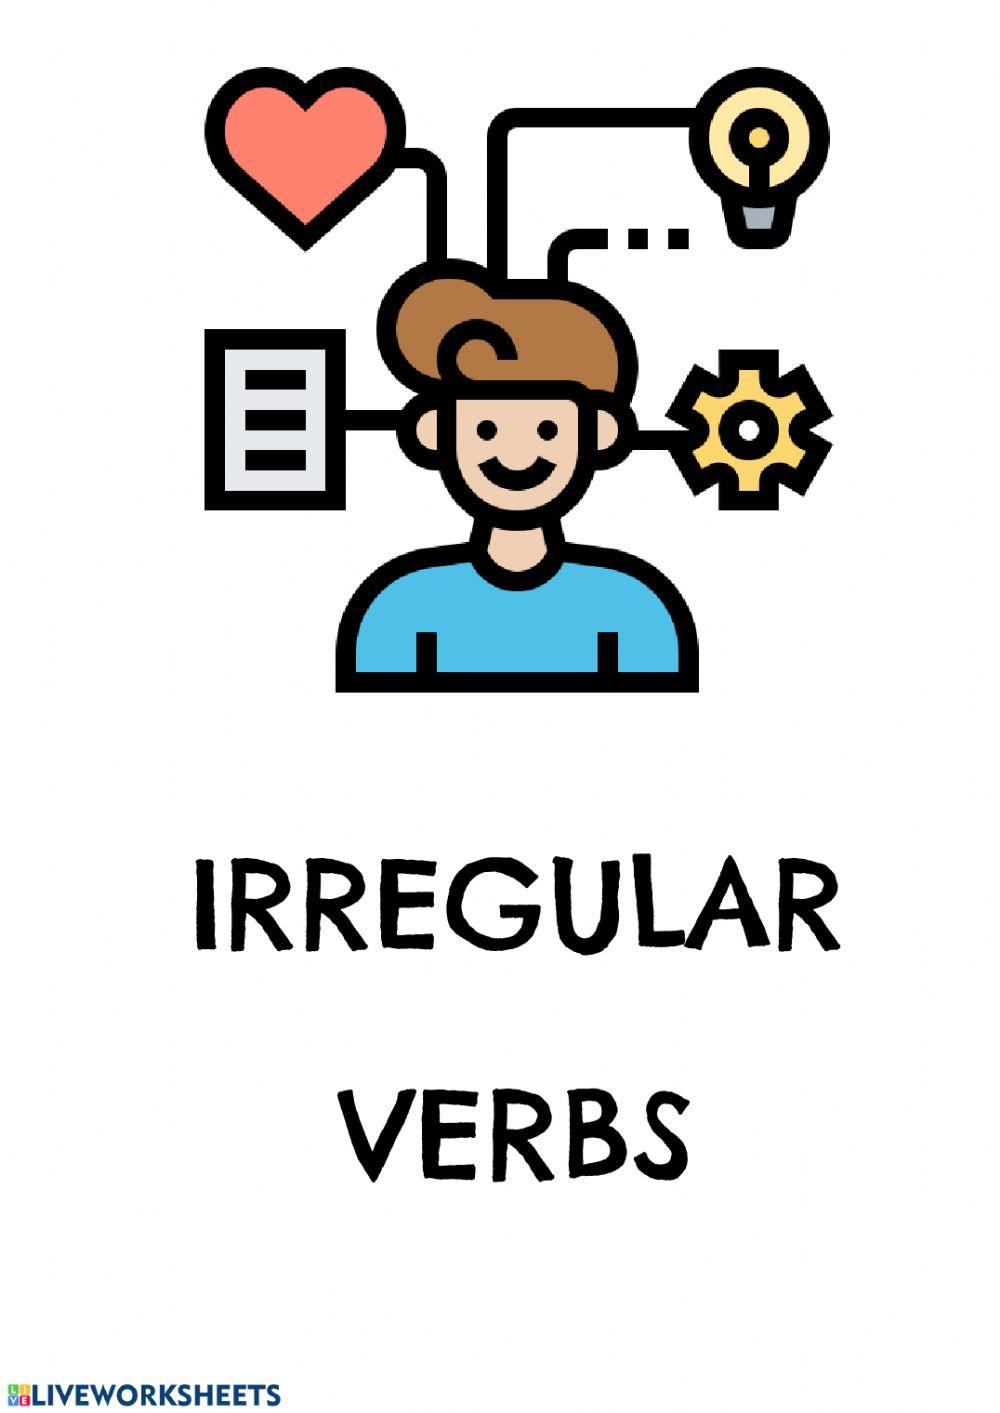 Irregular verbs- Exercises